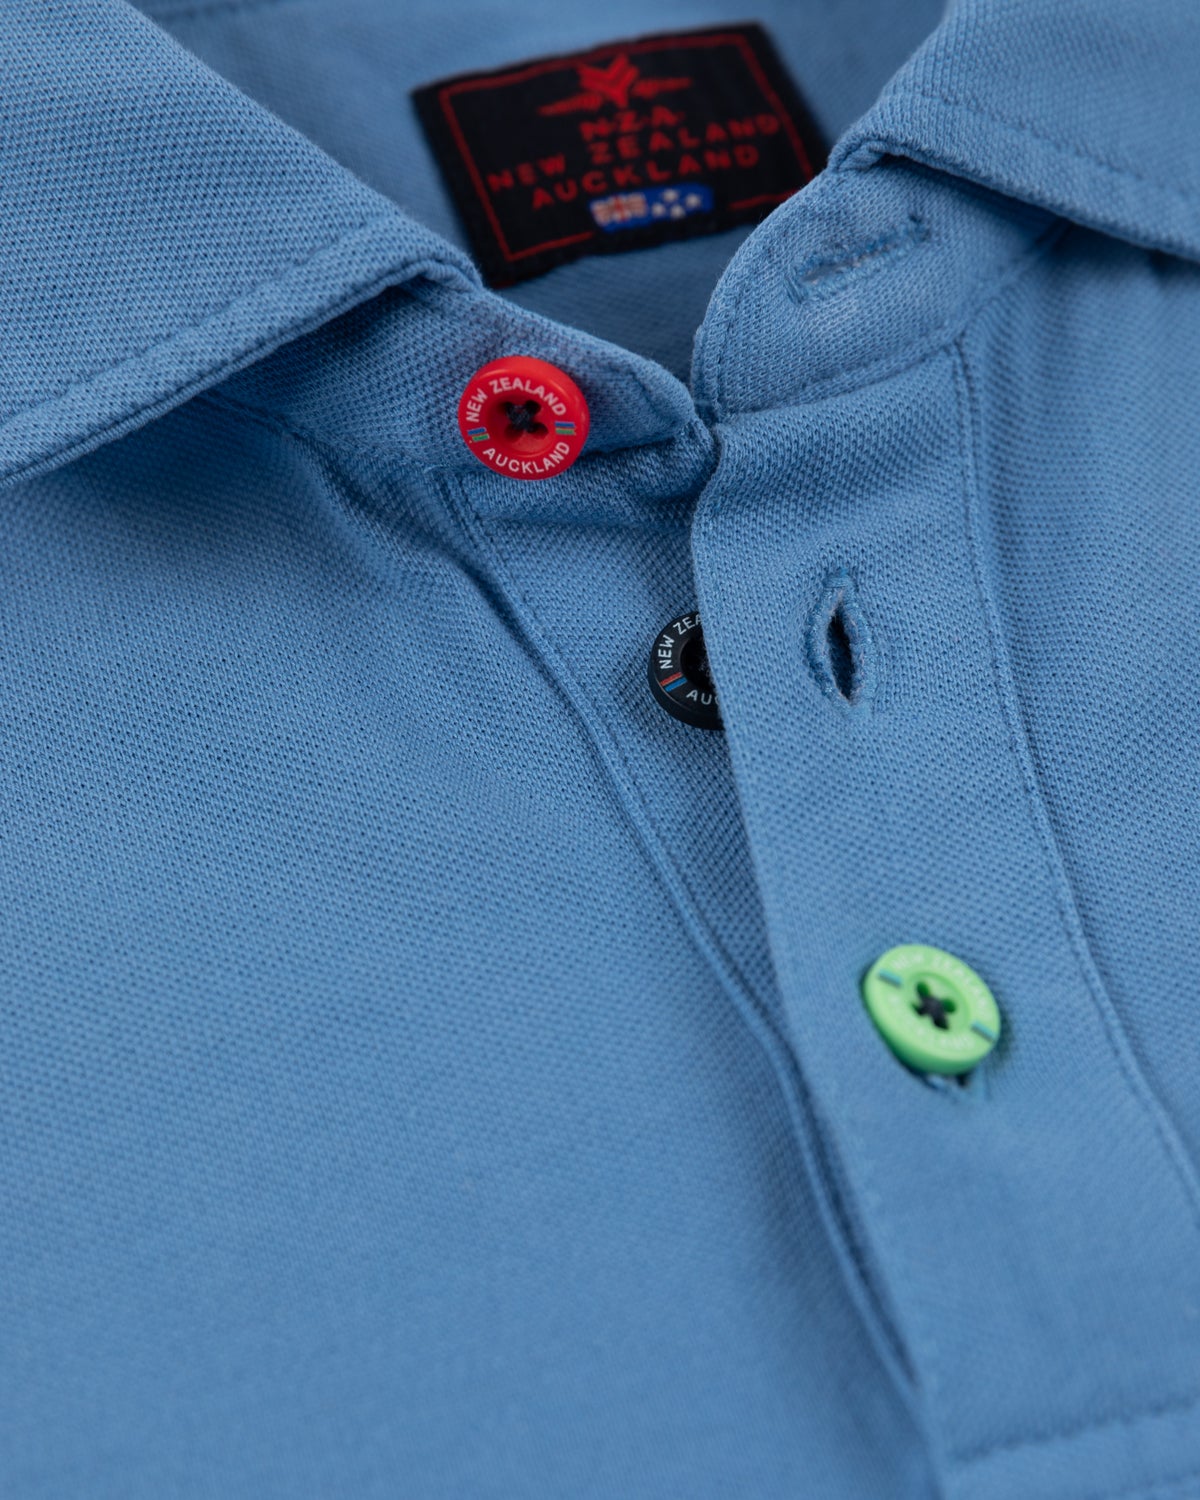 NZA Heritage polo shirt - Full blue